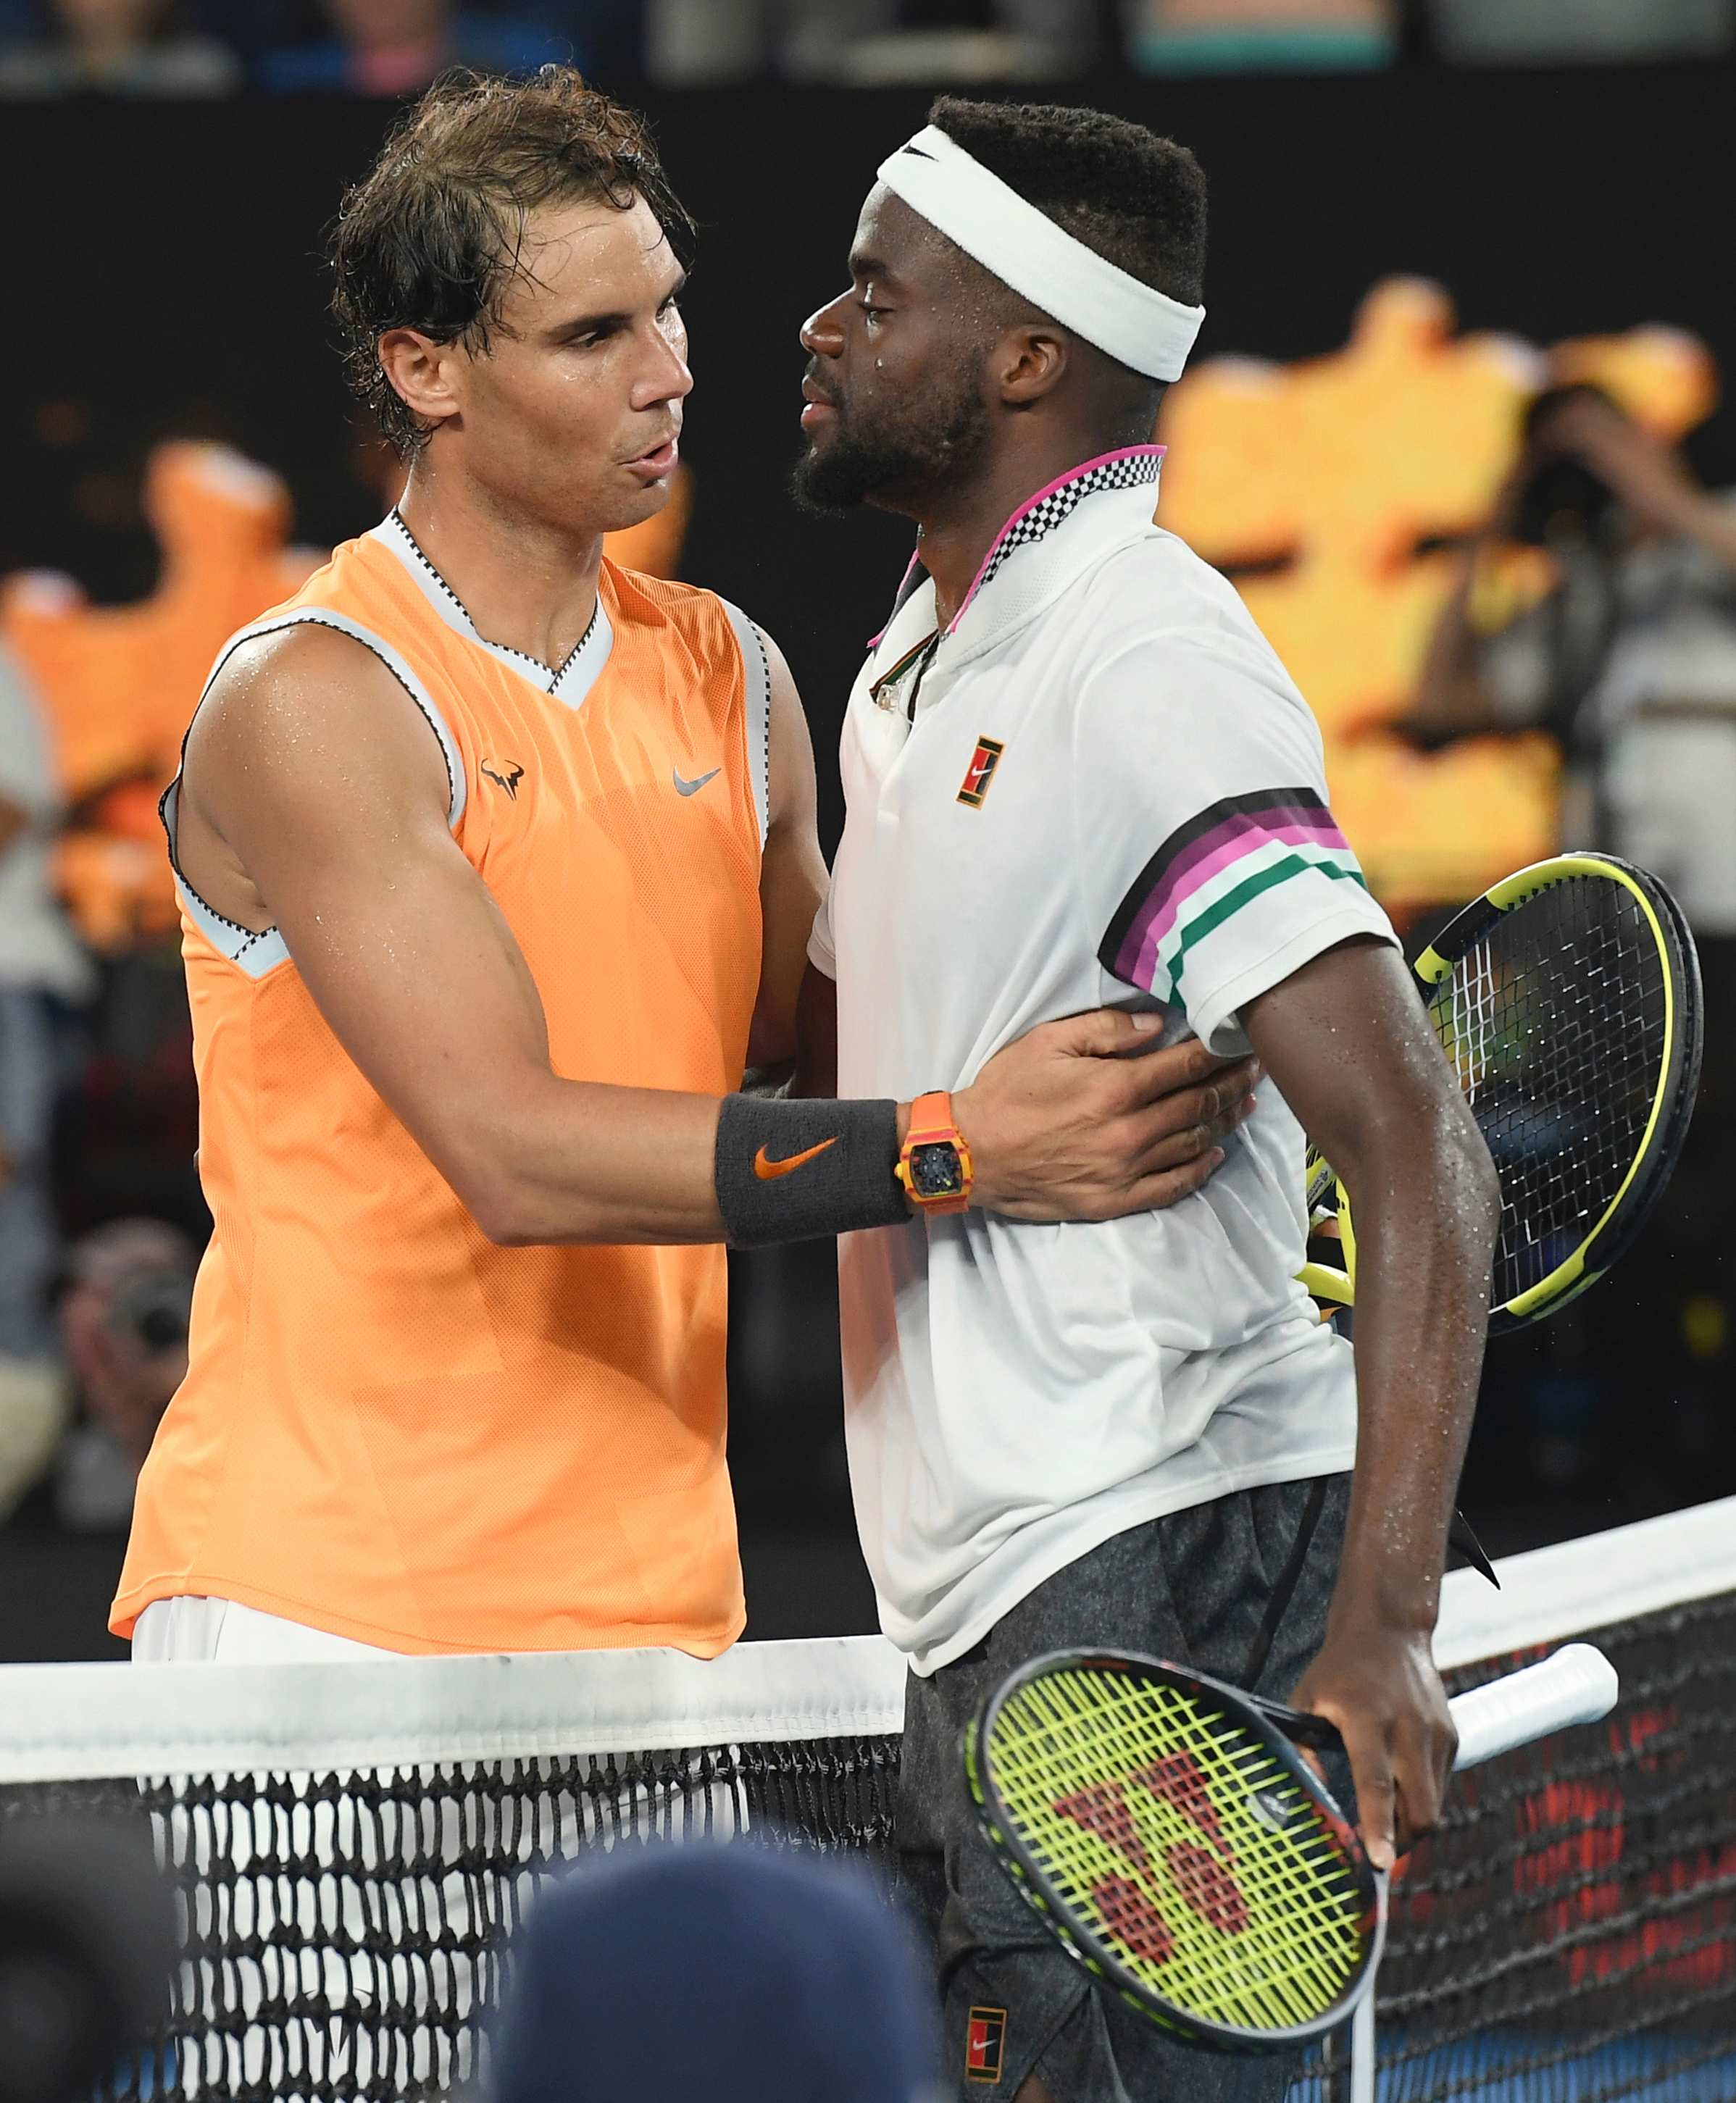 Australian Open semi for Rafael Nadal against Stefanos Tsitsipas after win over Frances Tiafoe